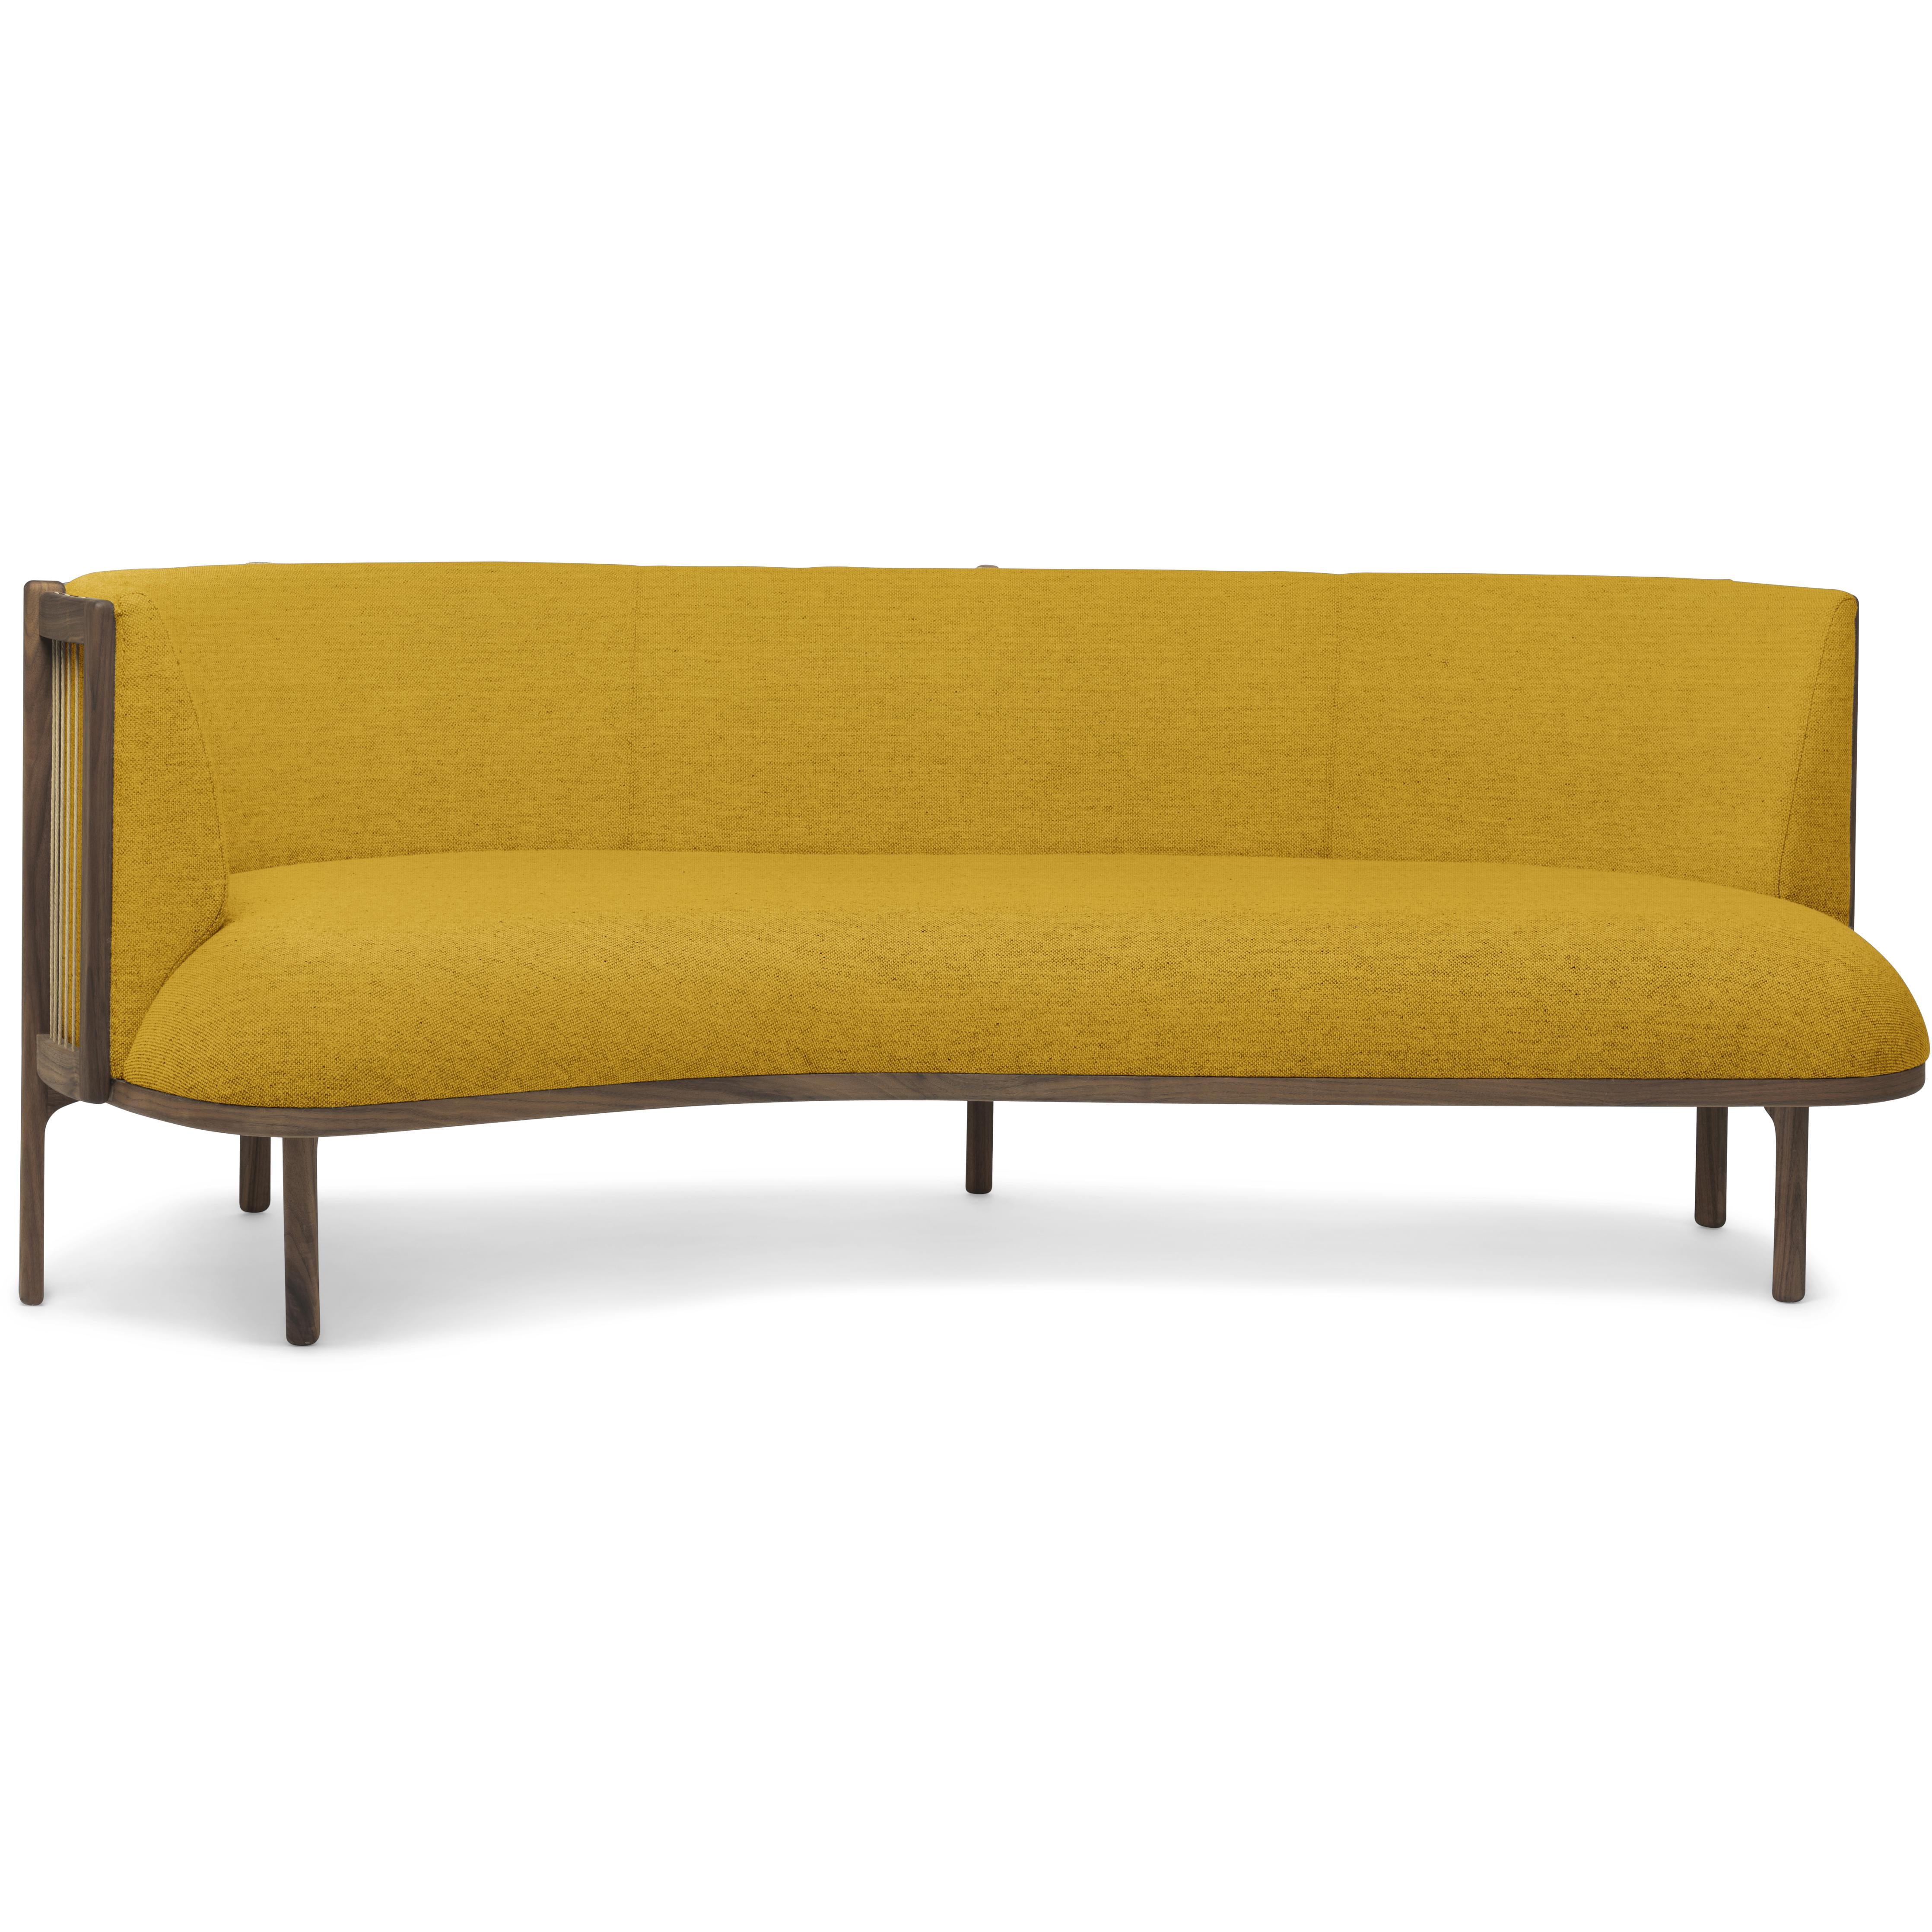 Carl Hansen RF1903-L Sideways 3-Persons soffa lämnade oljad valnöt/Hallingdal 457 Tyg, Yellow/Nature Brown